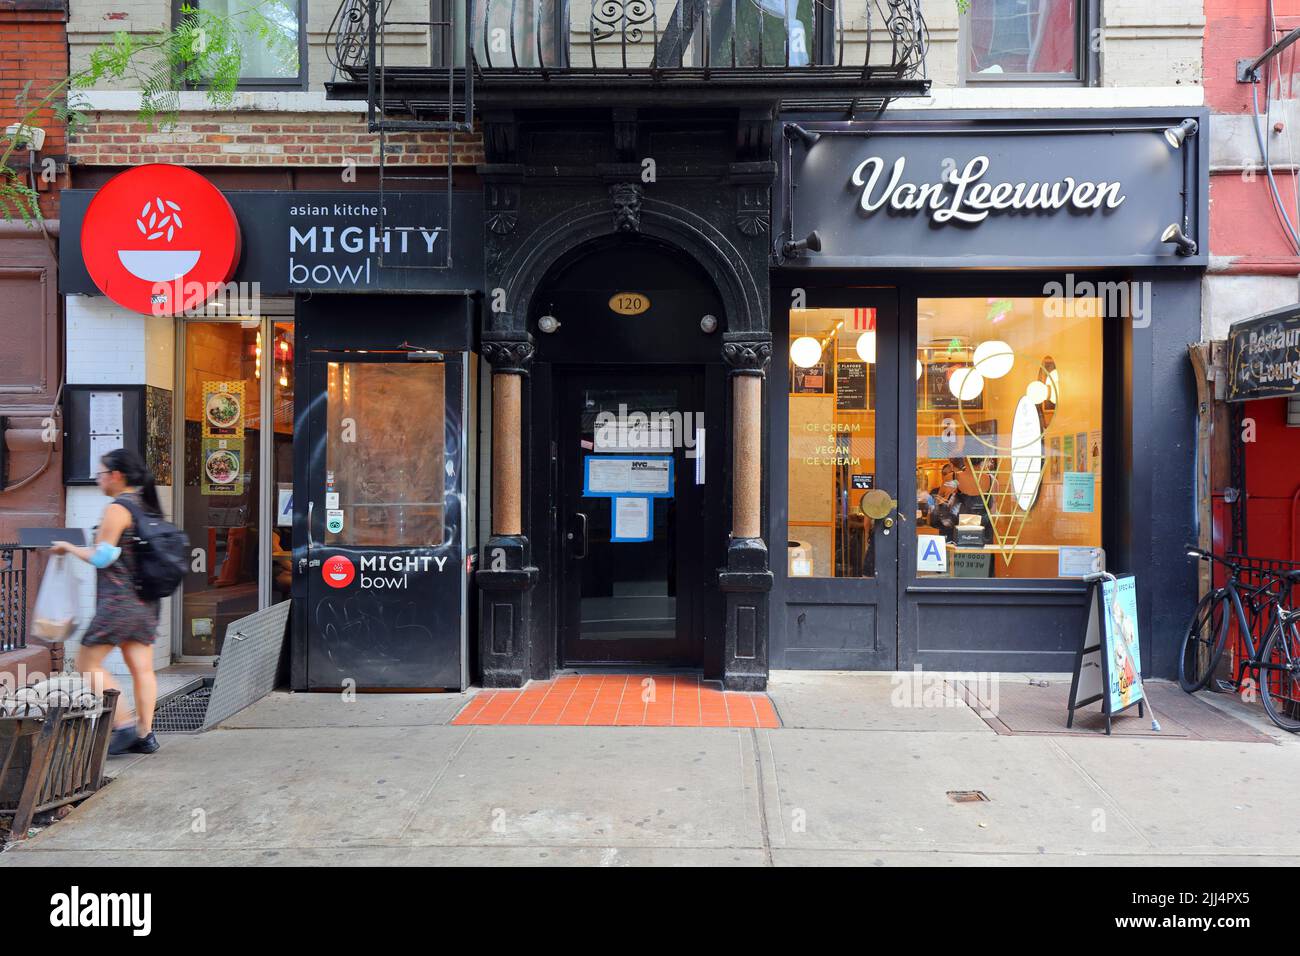 Van Leeuwen Ice Cream, Mighty Bowl, 120 MacDougal St, New York, NYC storefront photo of eateries in Manhattan's Greenwich Village neighborhood Stock Photo